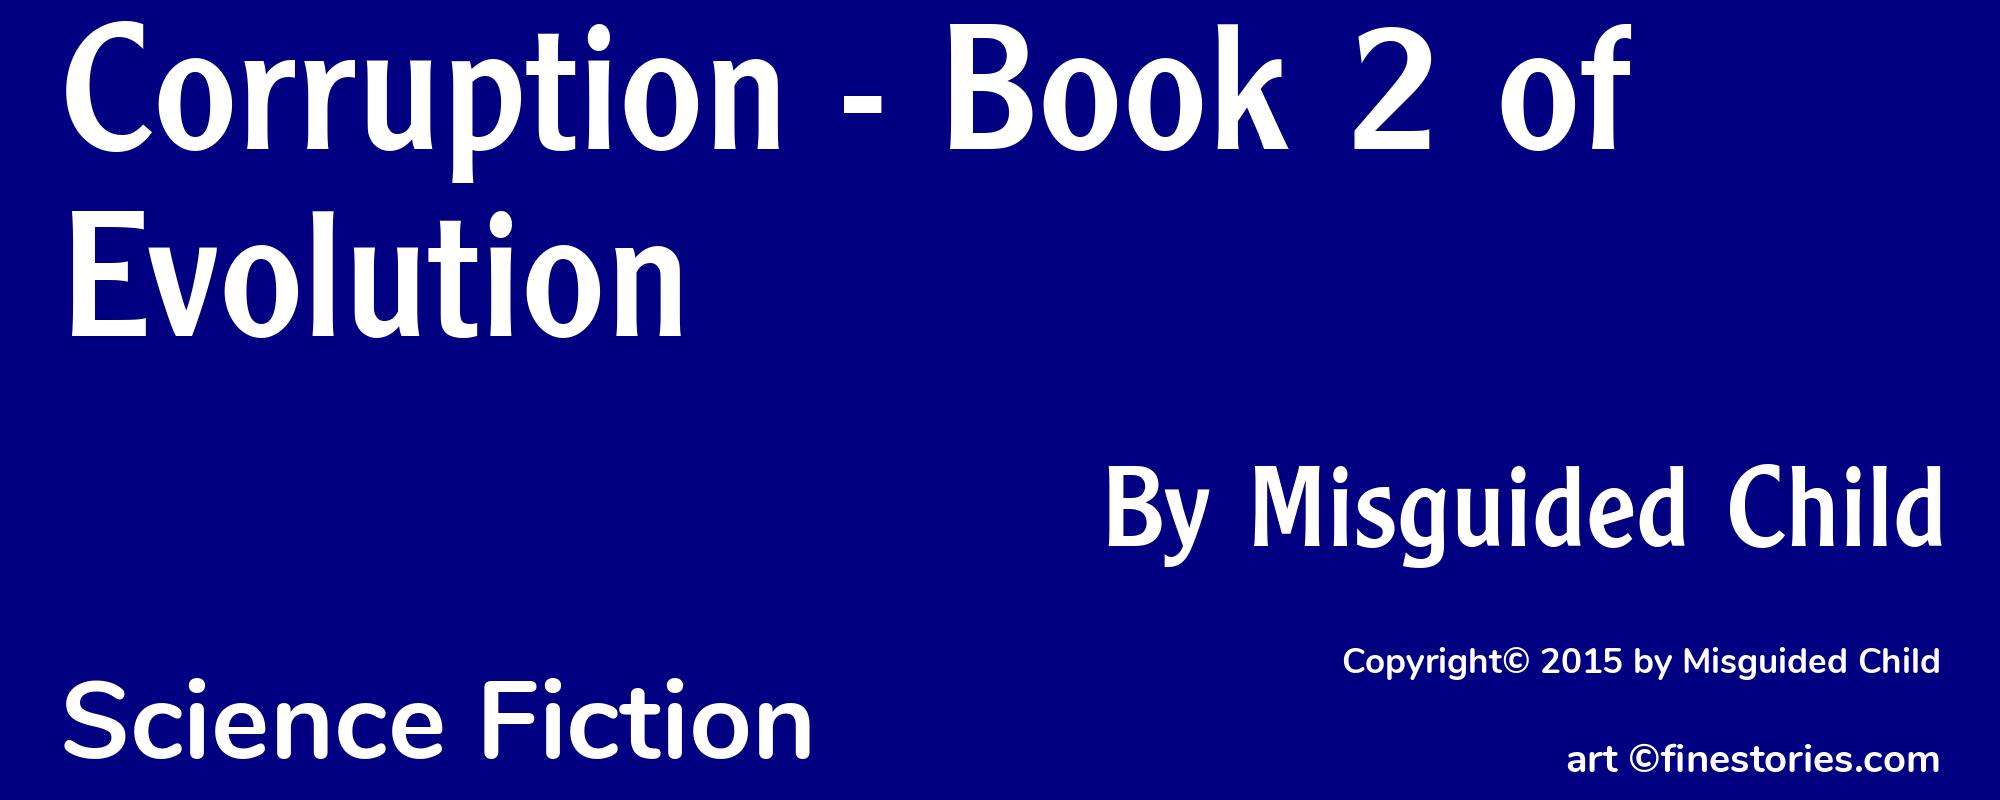 Corruption - Book 2 of Evolution - Cover